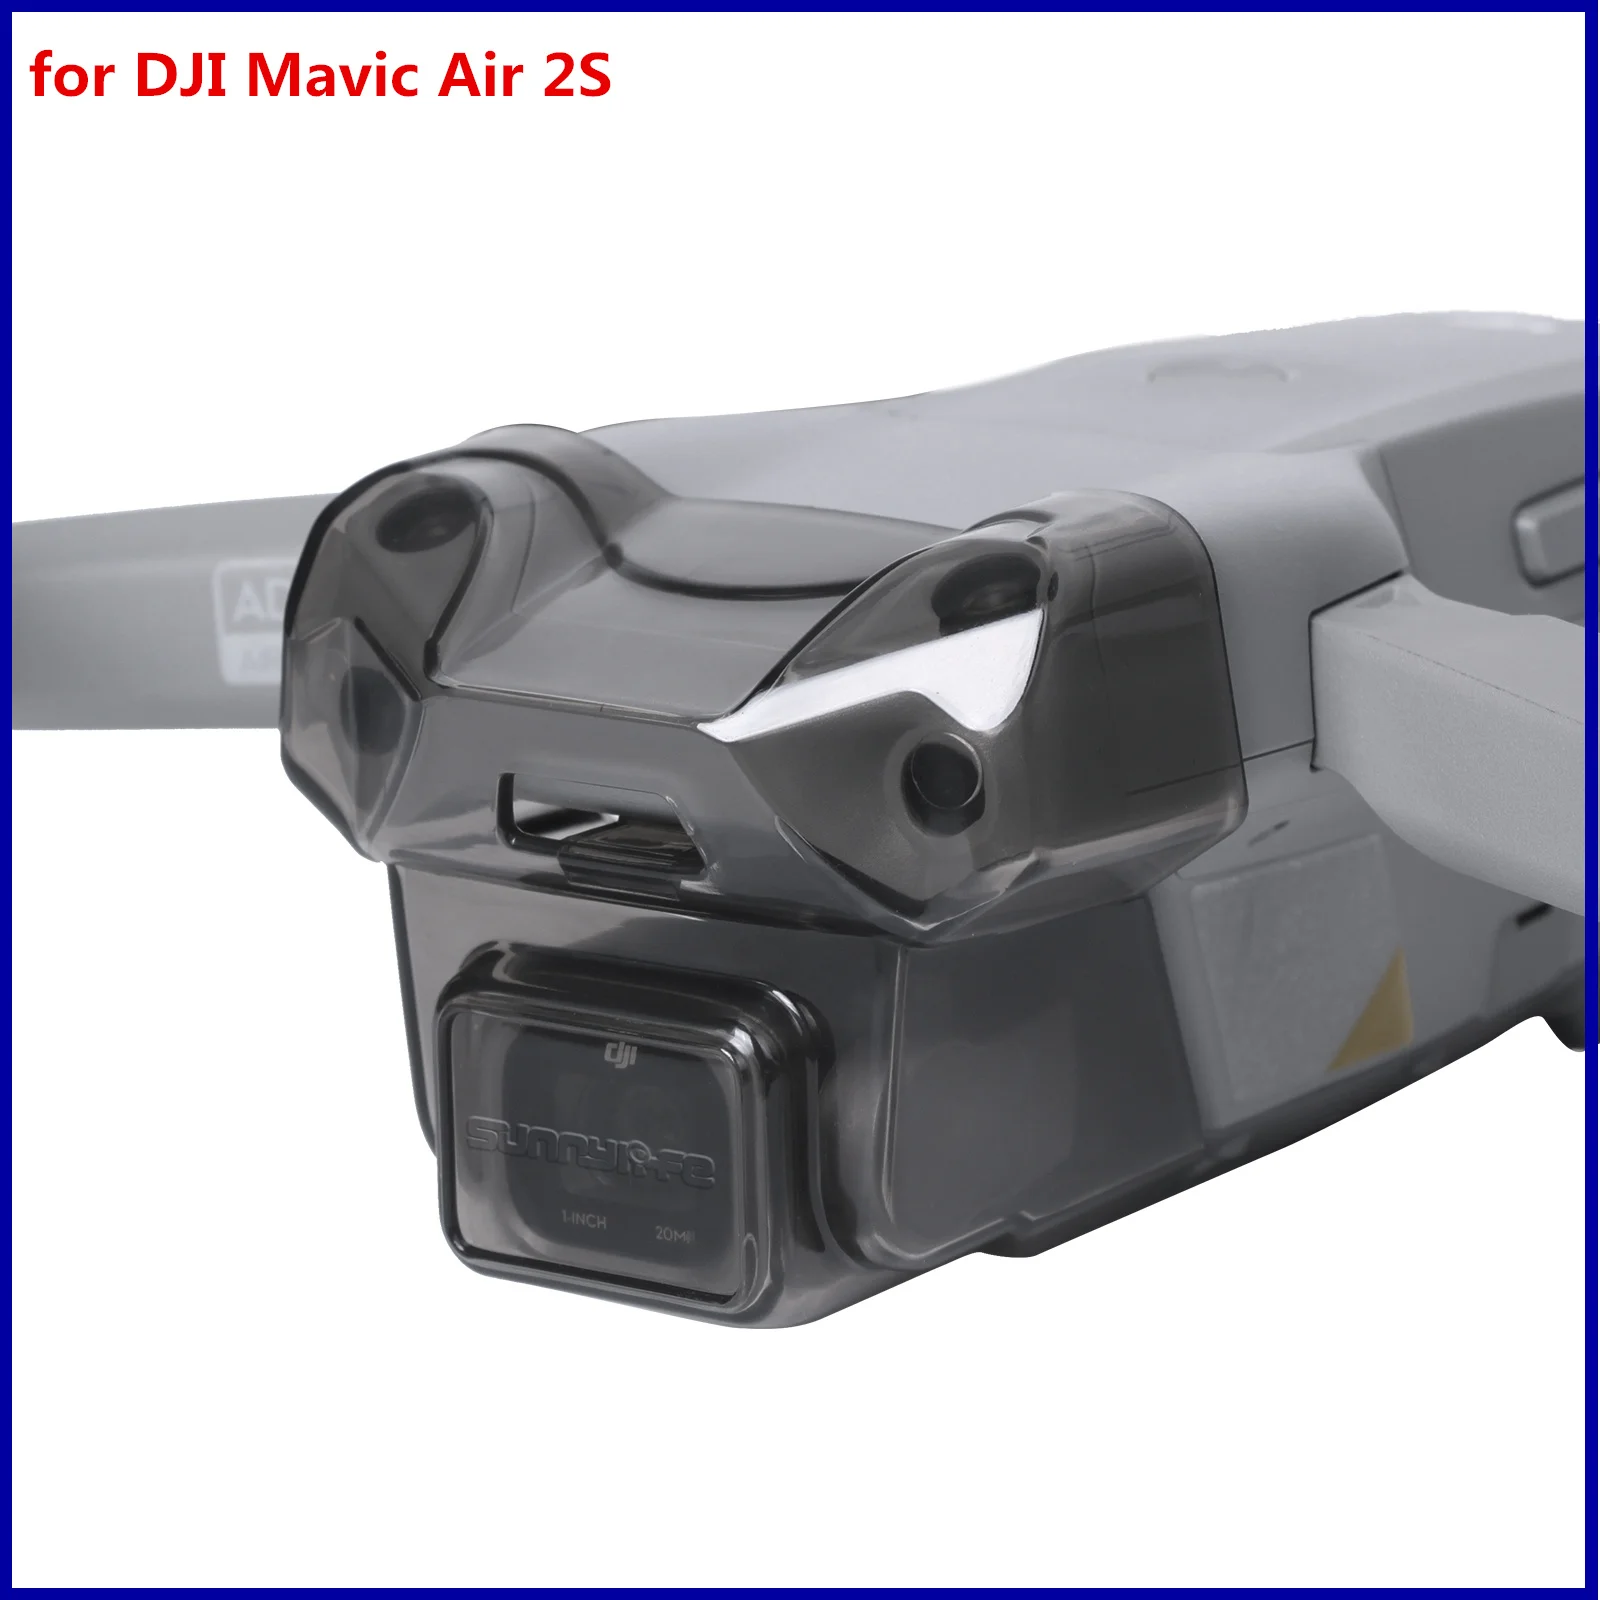 Lens Hood for DJI Mavic Air 2S Integrated Lens Cover Sunshade Protection Cap Protector Gimbal Camera Guard Anti-Glare Shield